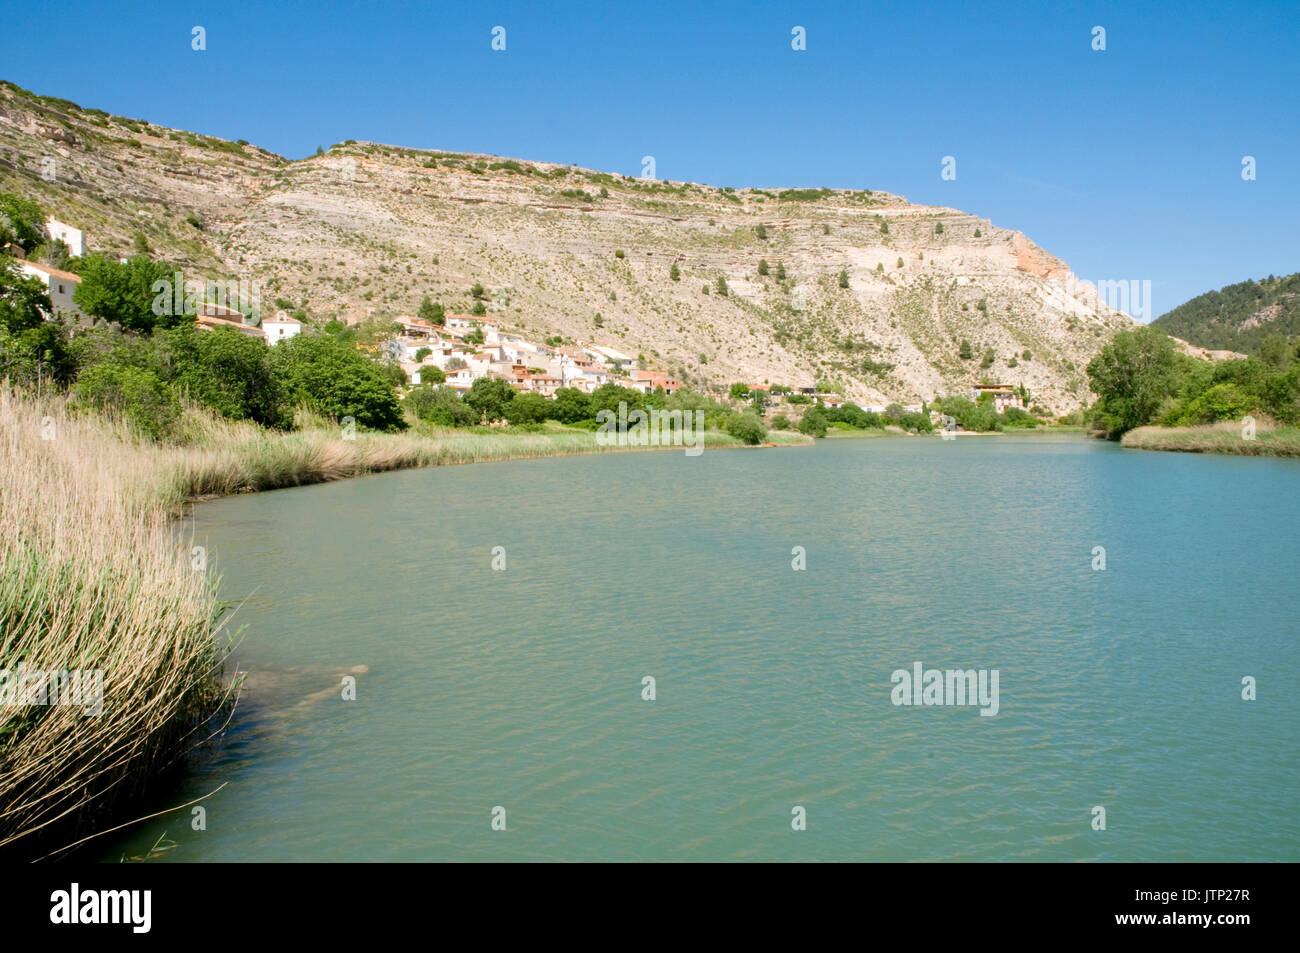 Reservoir. Alcala del Jucar, Albacete province, Spain. Stock Photo